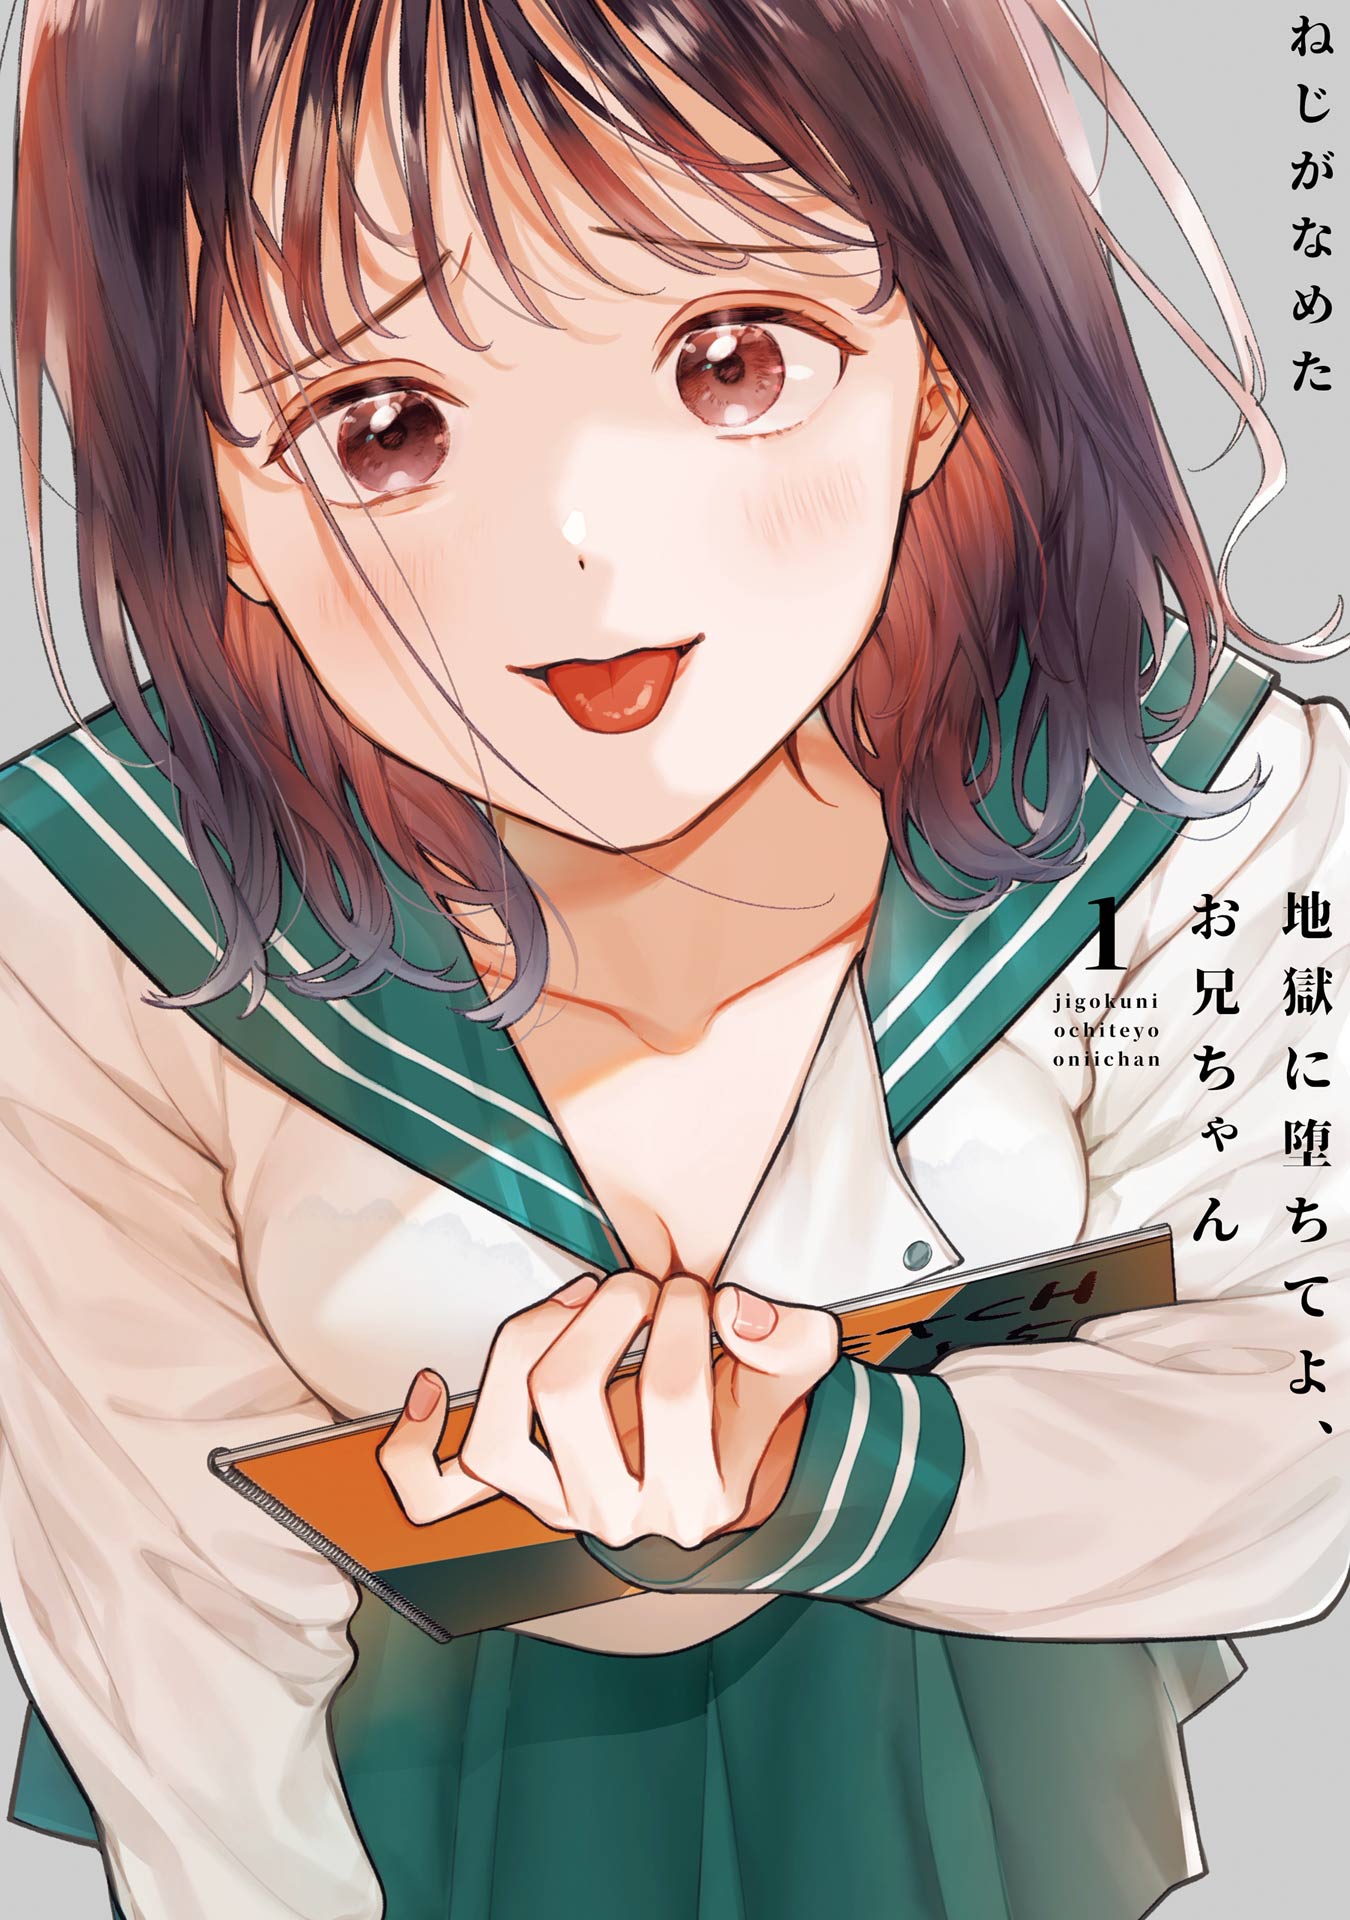 Jigoku Ni Ochite Yo, Onii-Chan Vol.1 Chapter 1: A Little Sister Appears - Picture 2